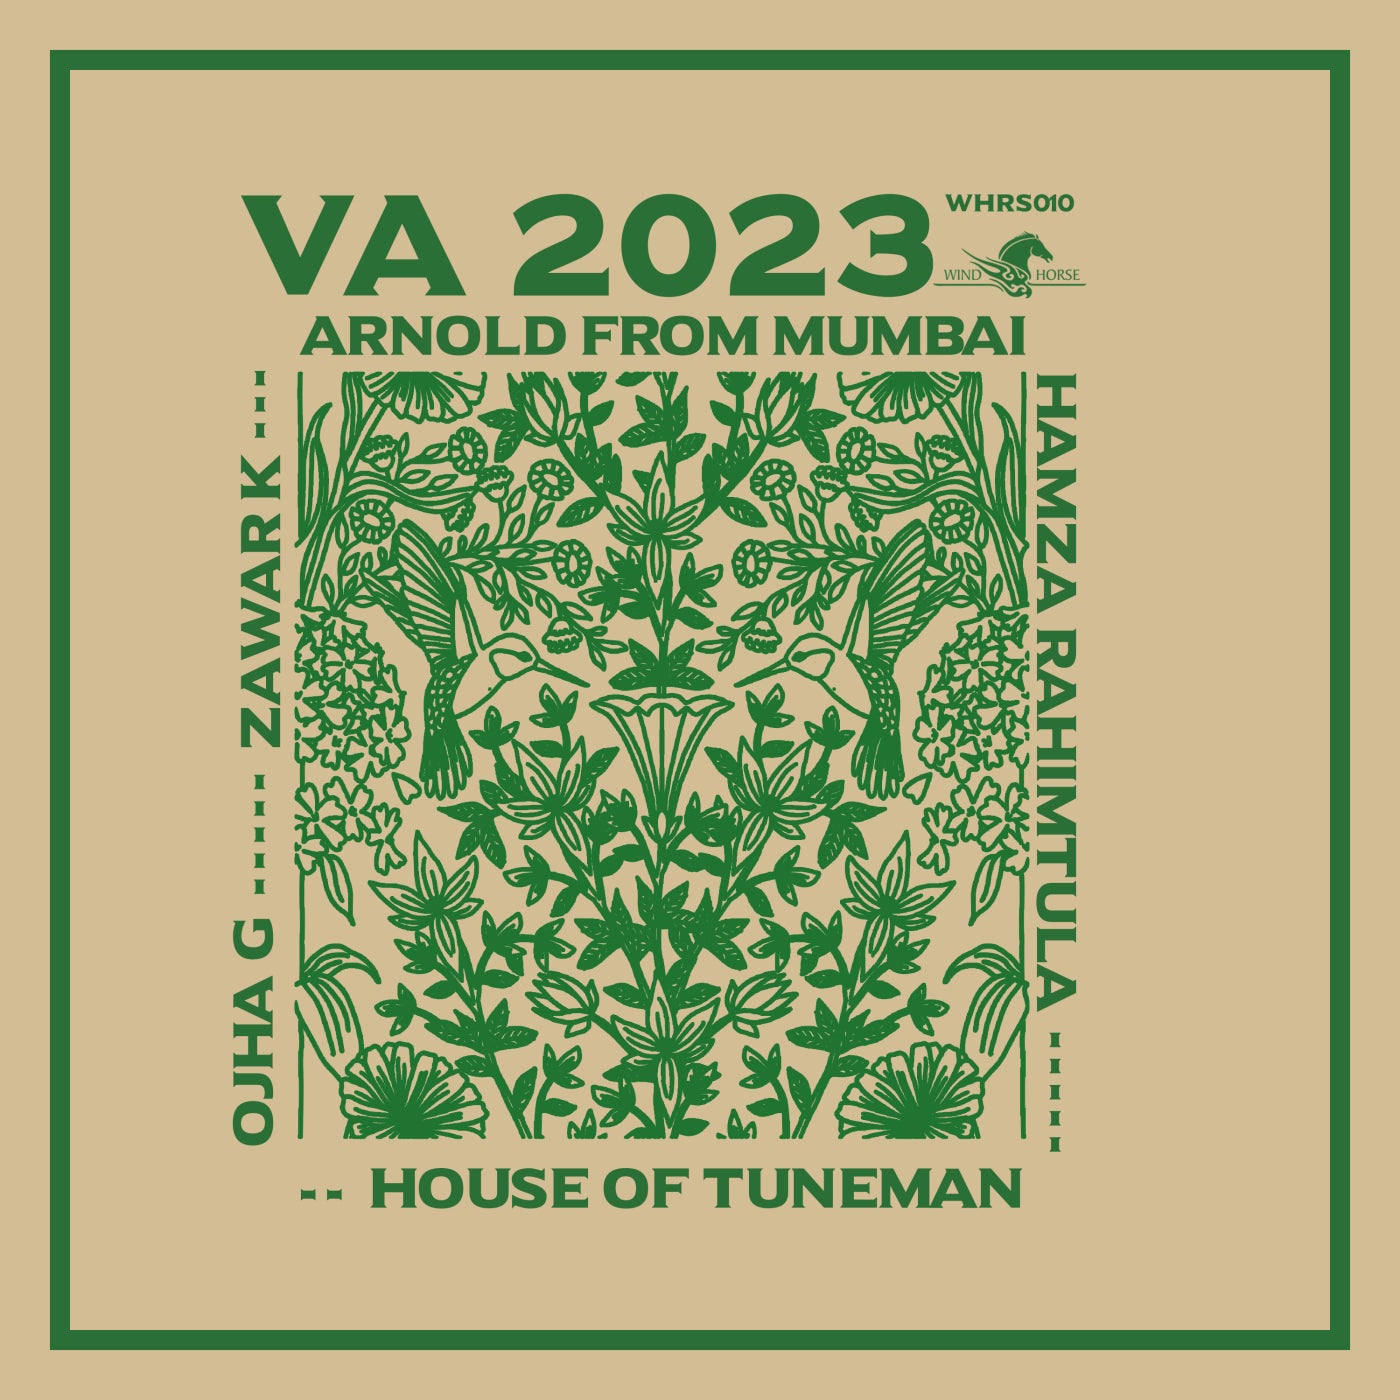 VA 2023